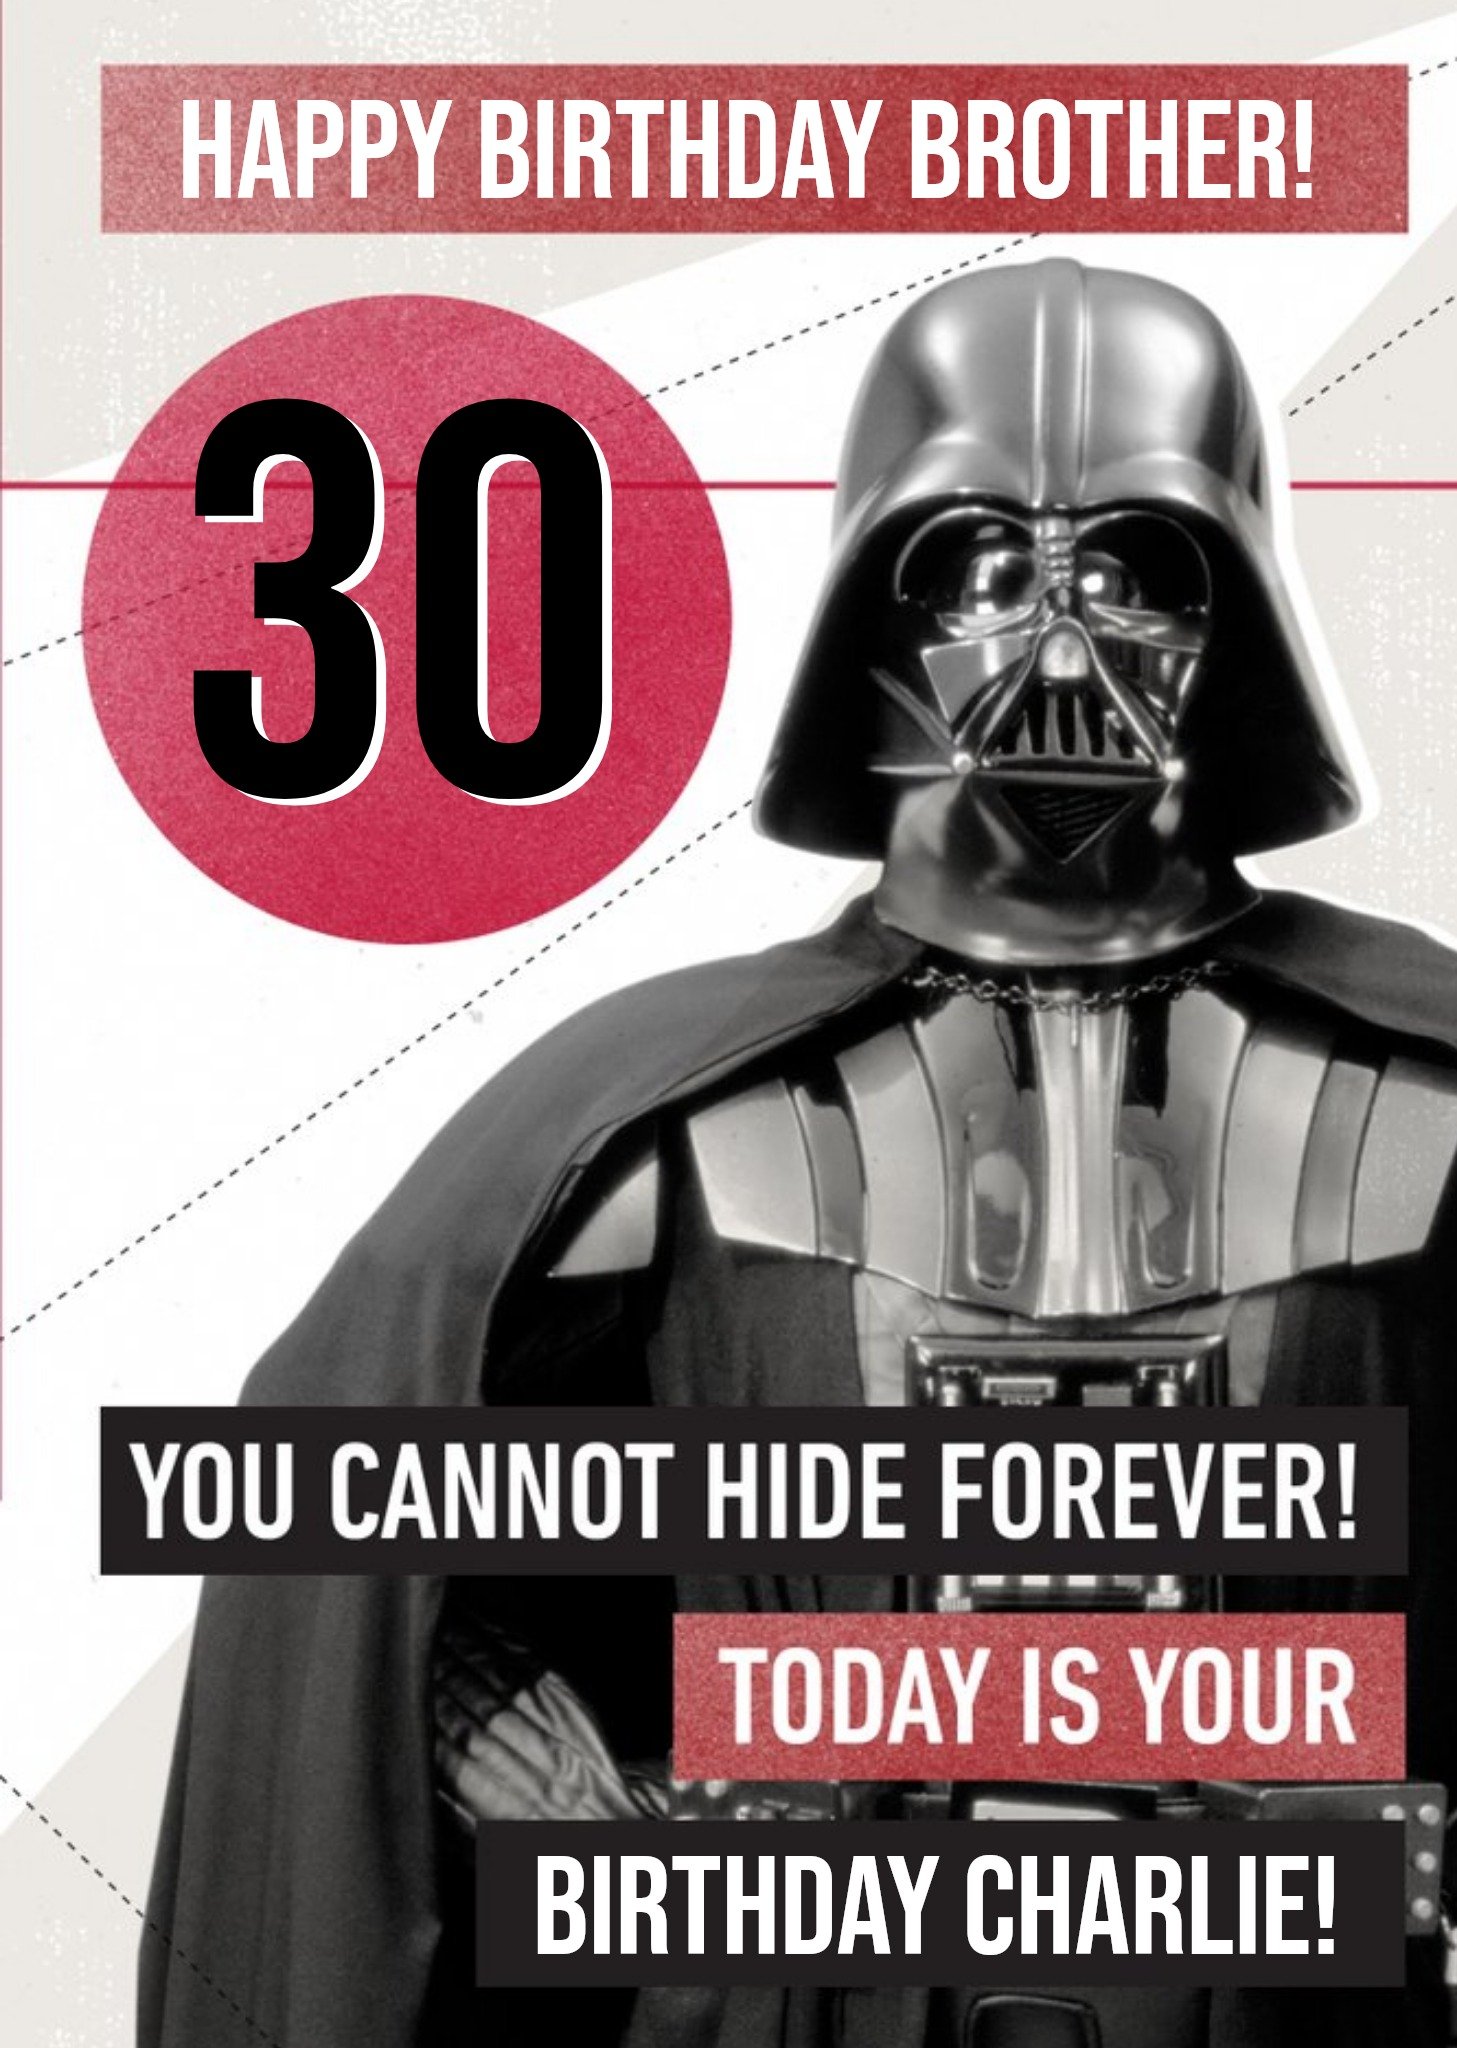 Disney Star Wars Darth Vader 30th Birthday Card For Brother Ecard